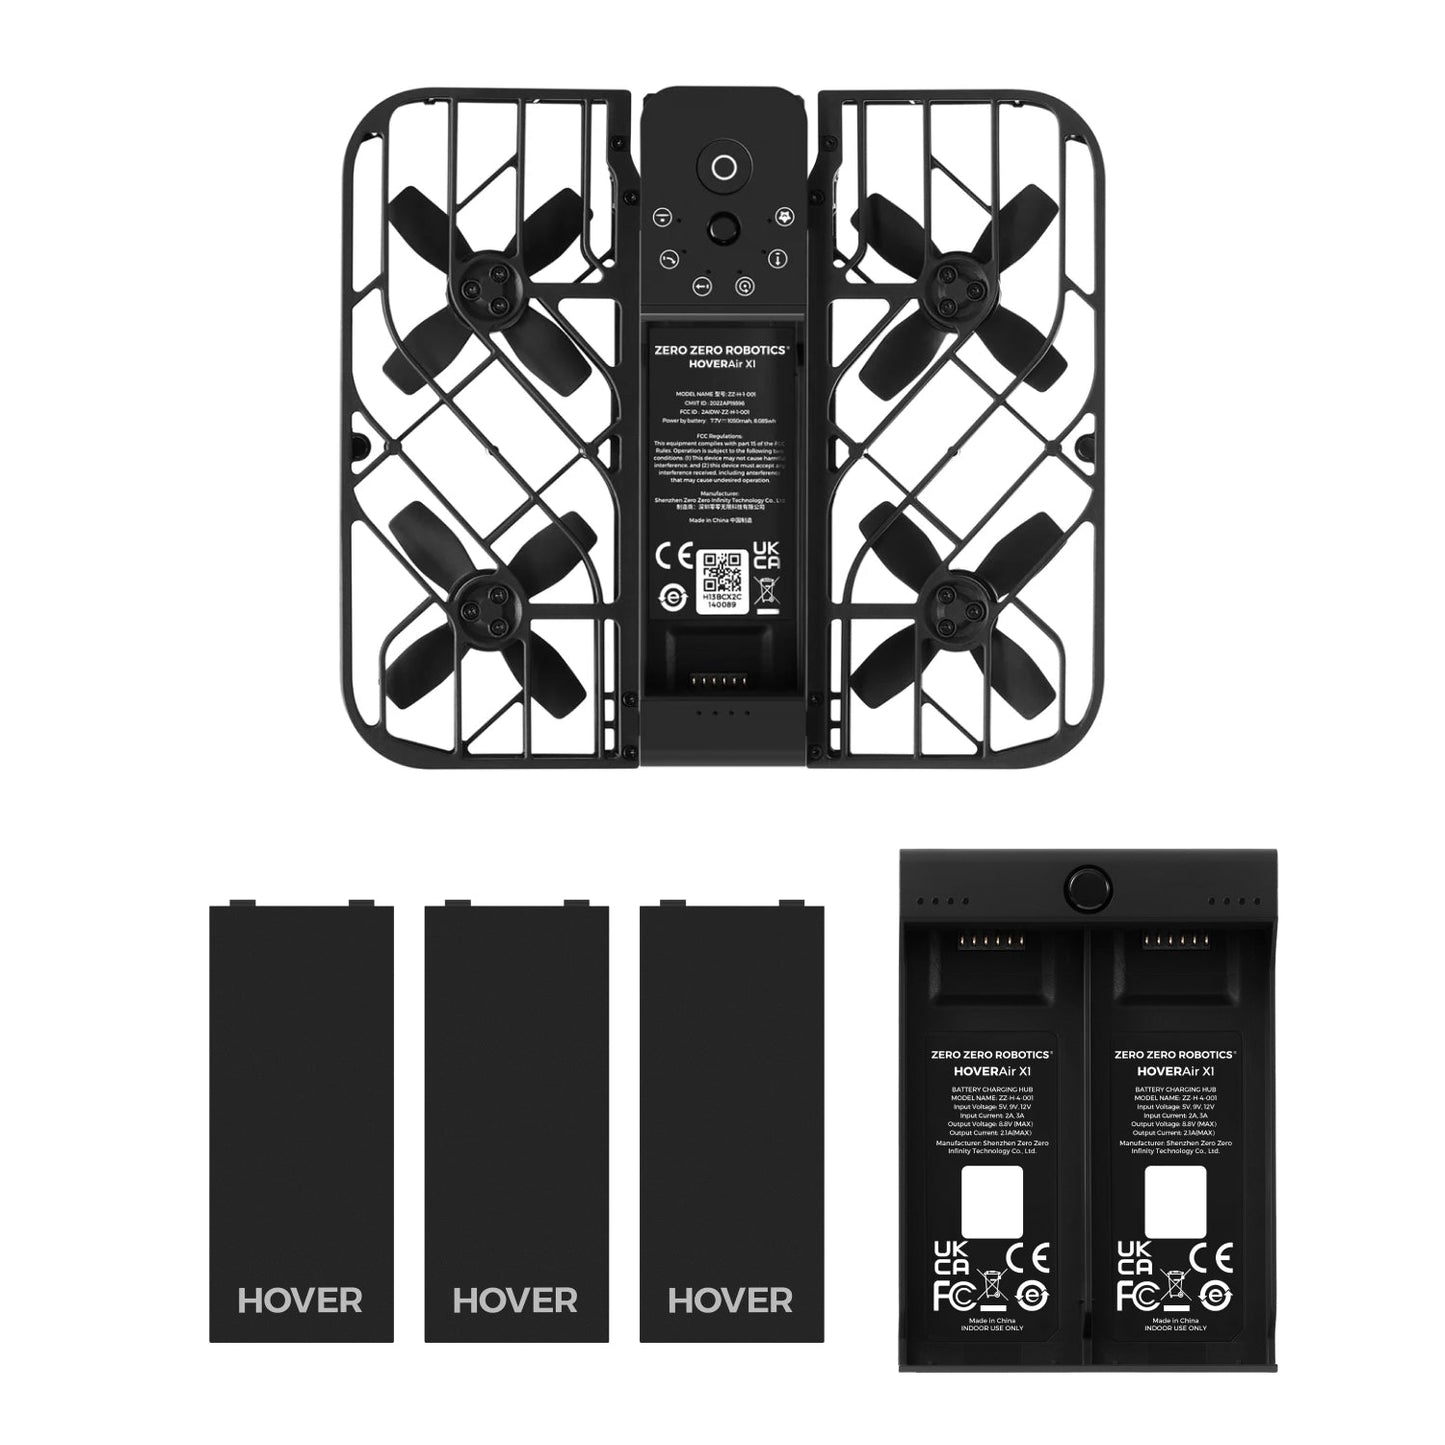 HOVERAir x1 Pocket-Sized Self-Flying Camera Drone